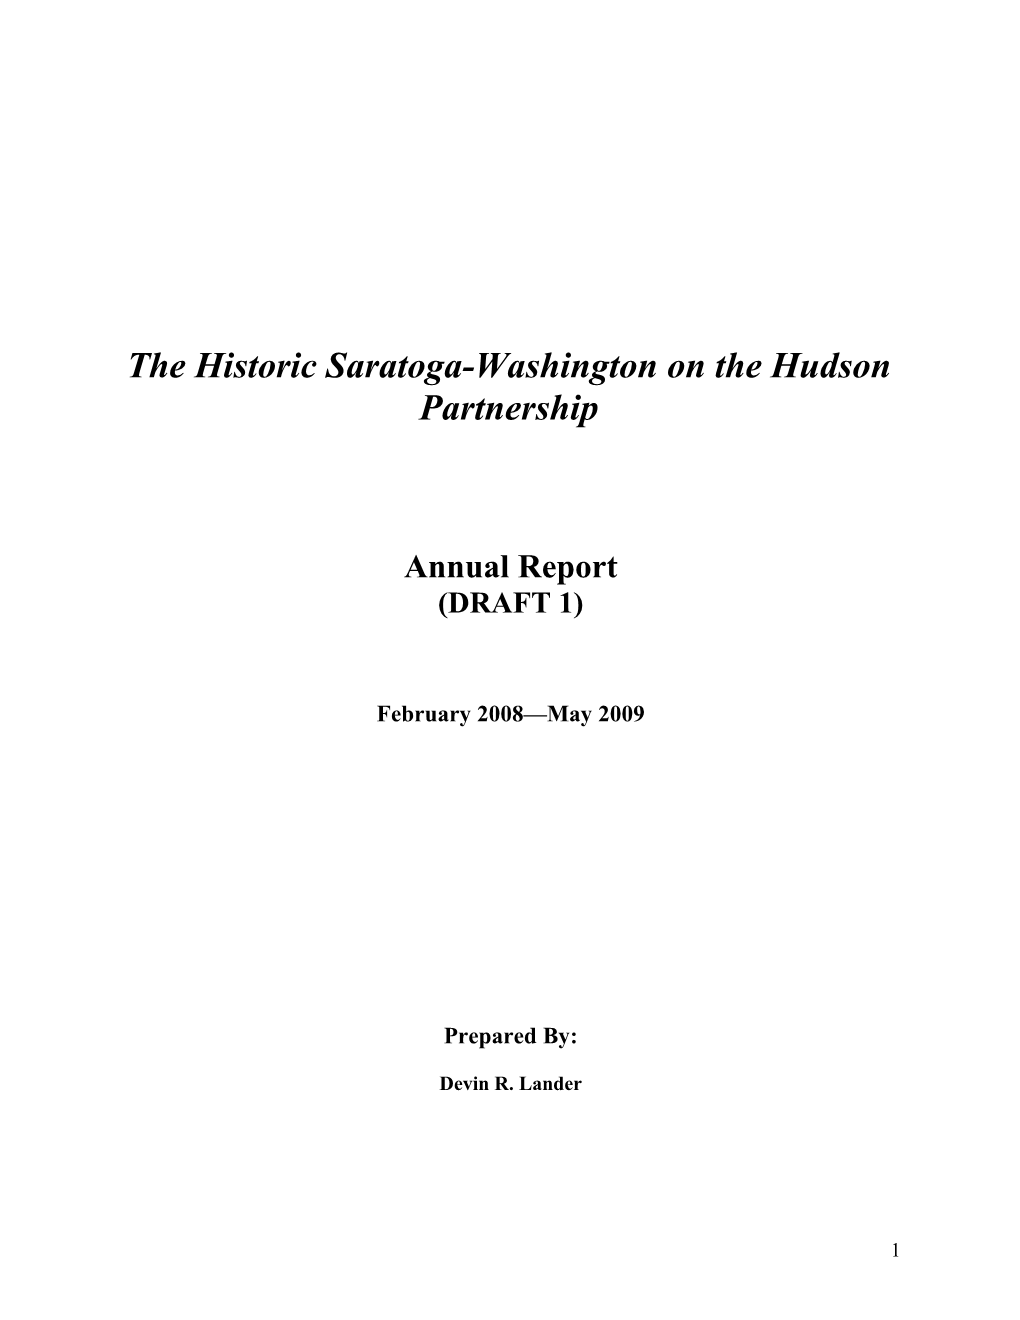 The Historic Saratoga-Washington on the Hudson Partnership